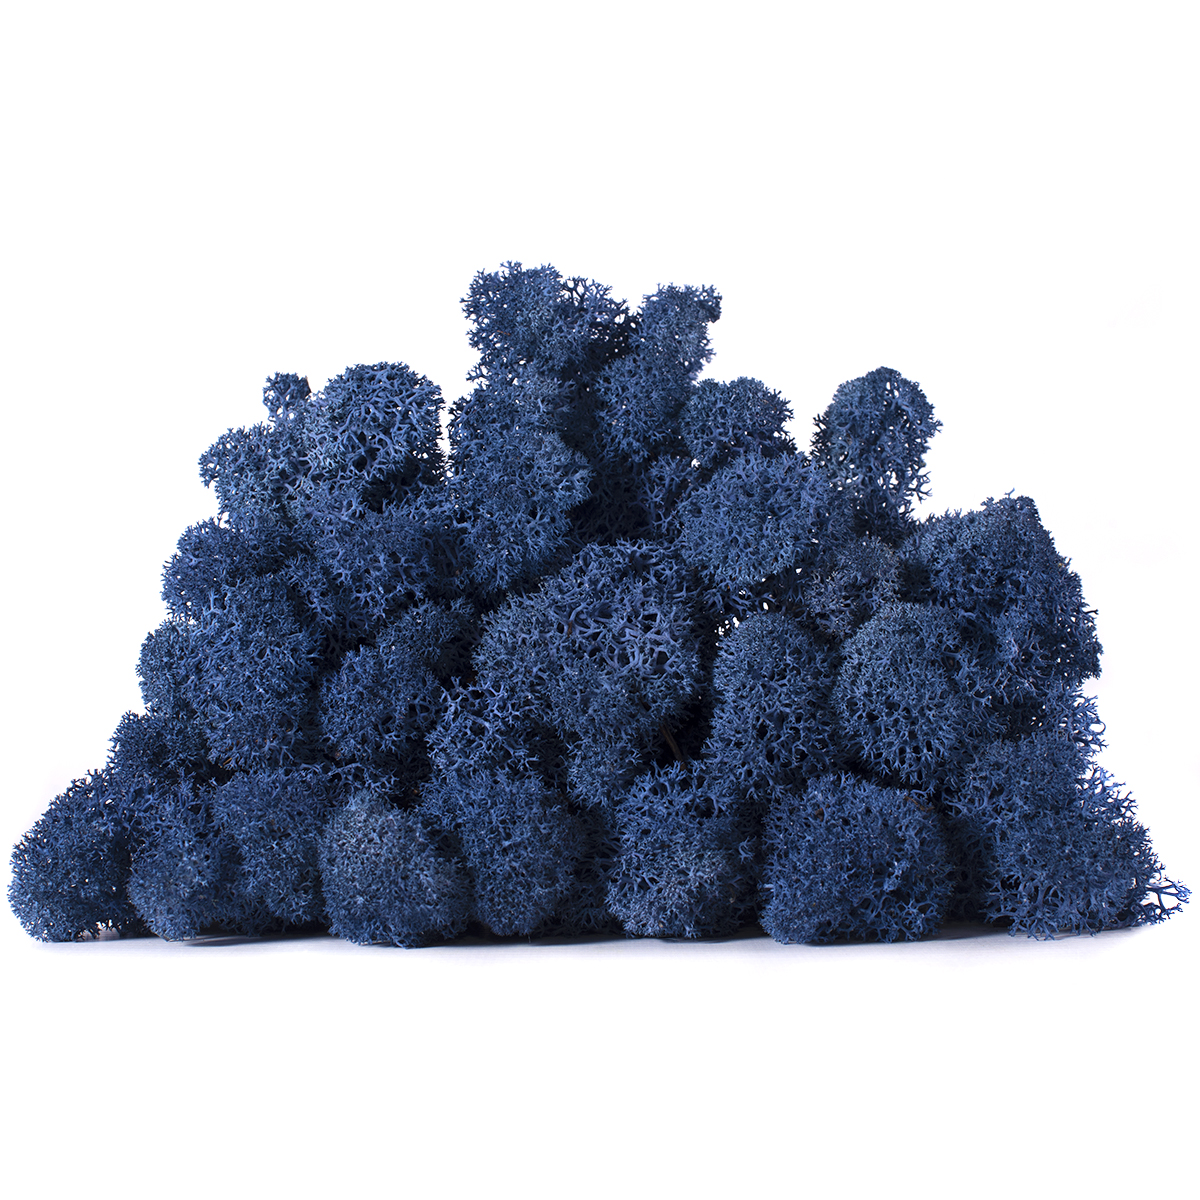 Lic/4086 lichen stabilisée bleu azur box 4 kg